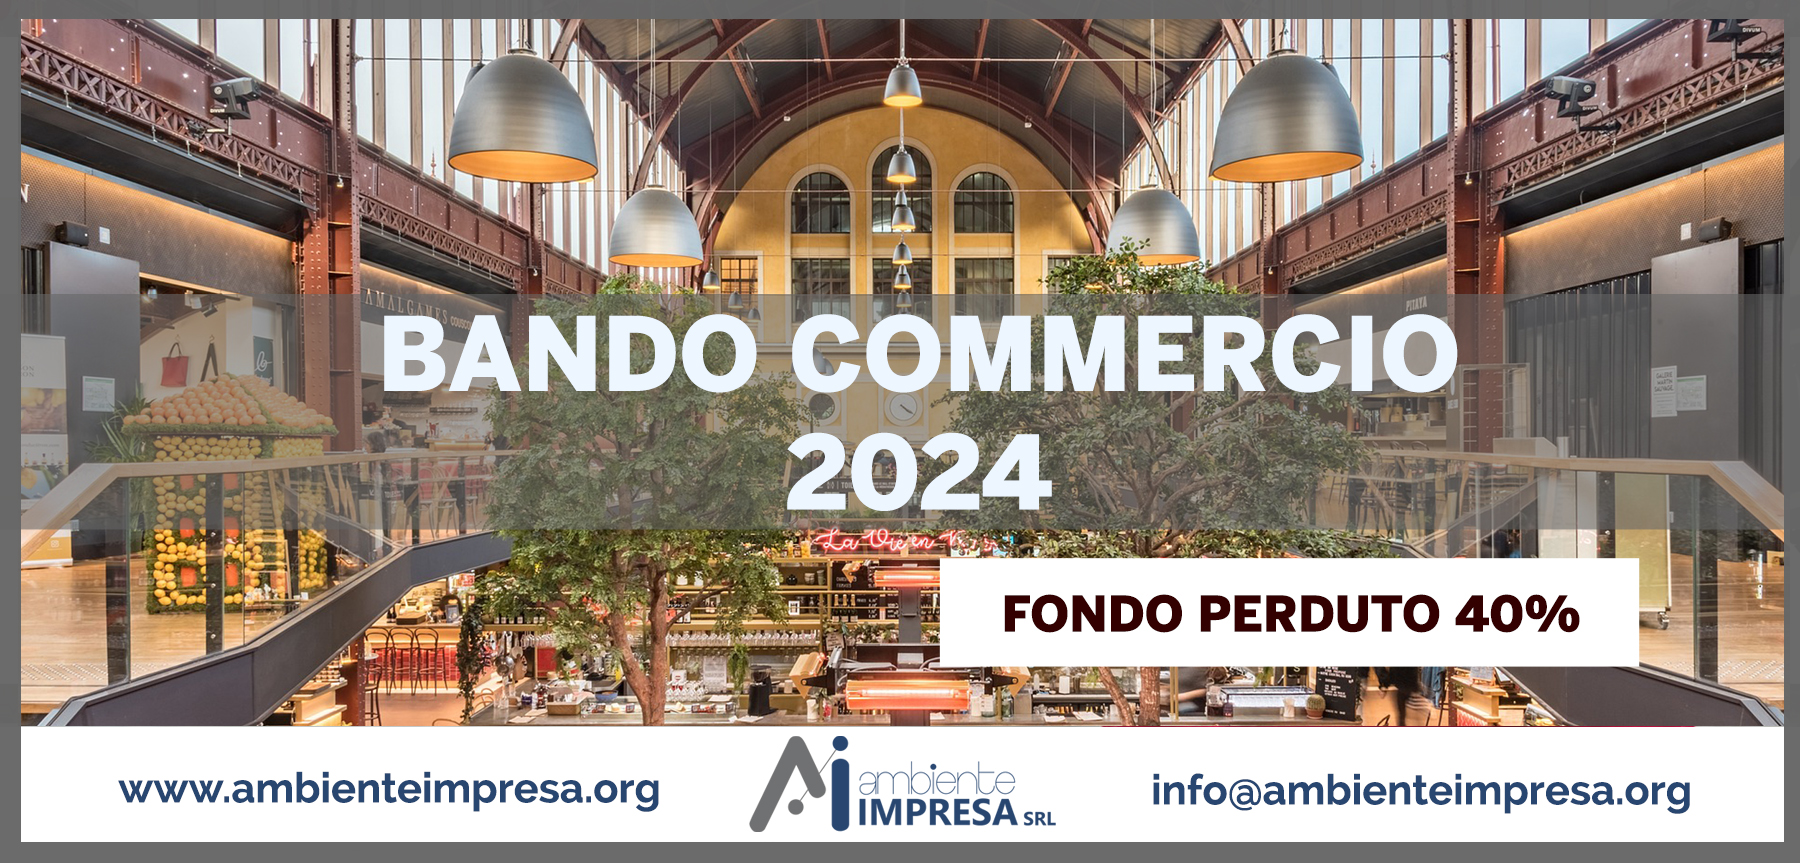 Bando Commercio 2024 - Ambiente Impresa SRL - Cagliari